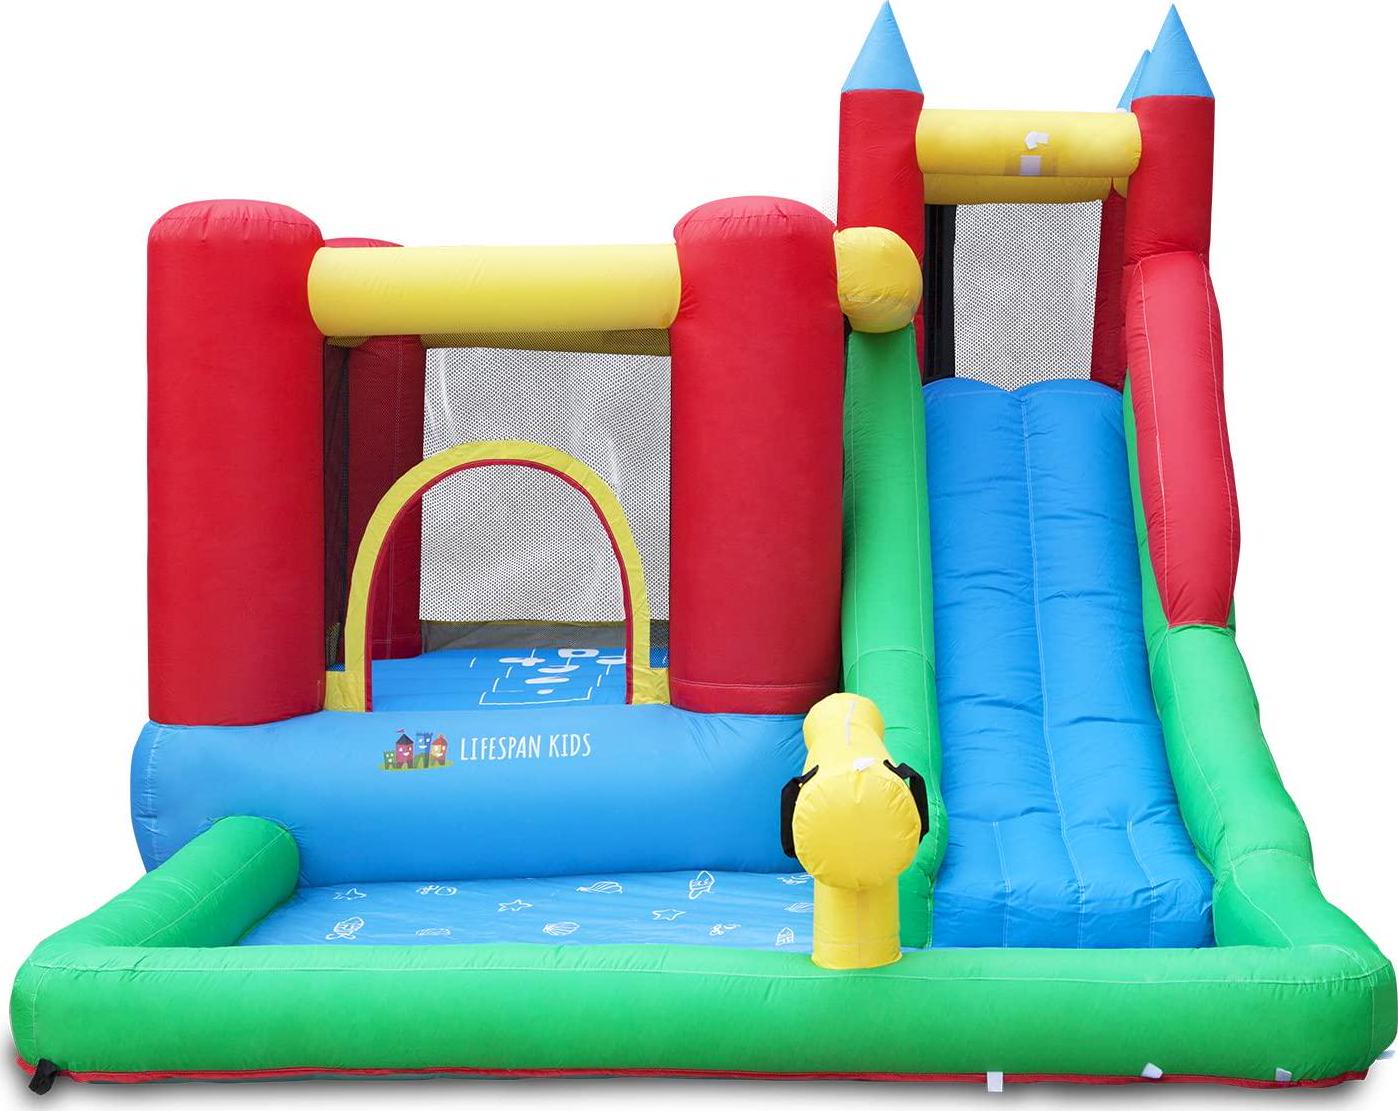 LIFESPAN KIDS, Lifespan Kids Inflatable Surrey 2 Slide and Splash Water Play Childrens Play Ground Outdoor